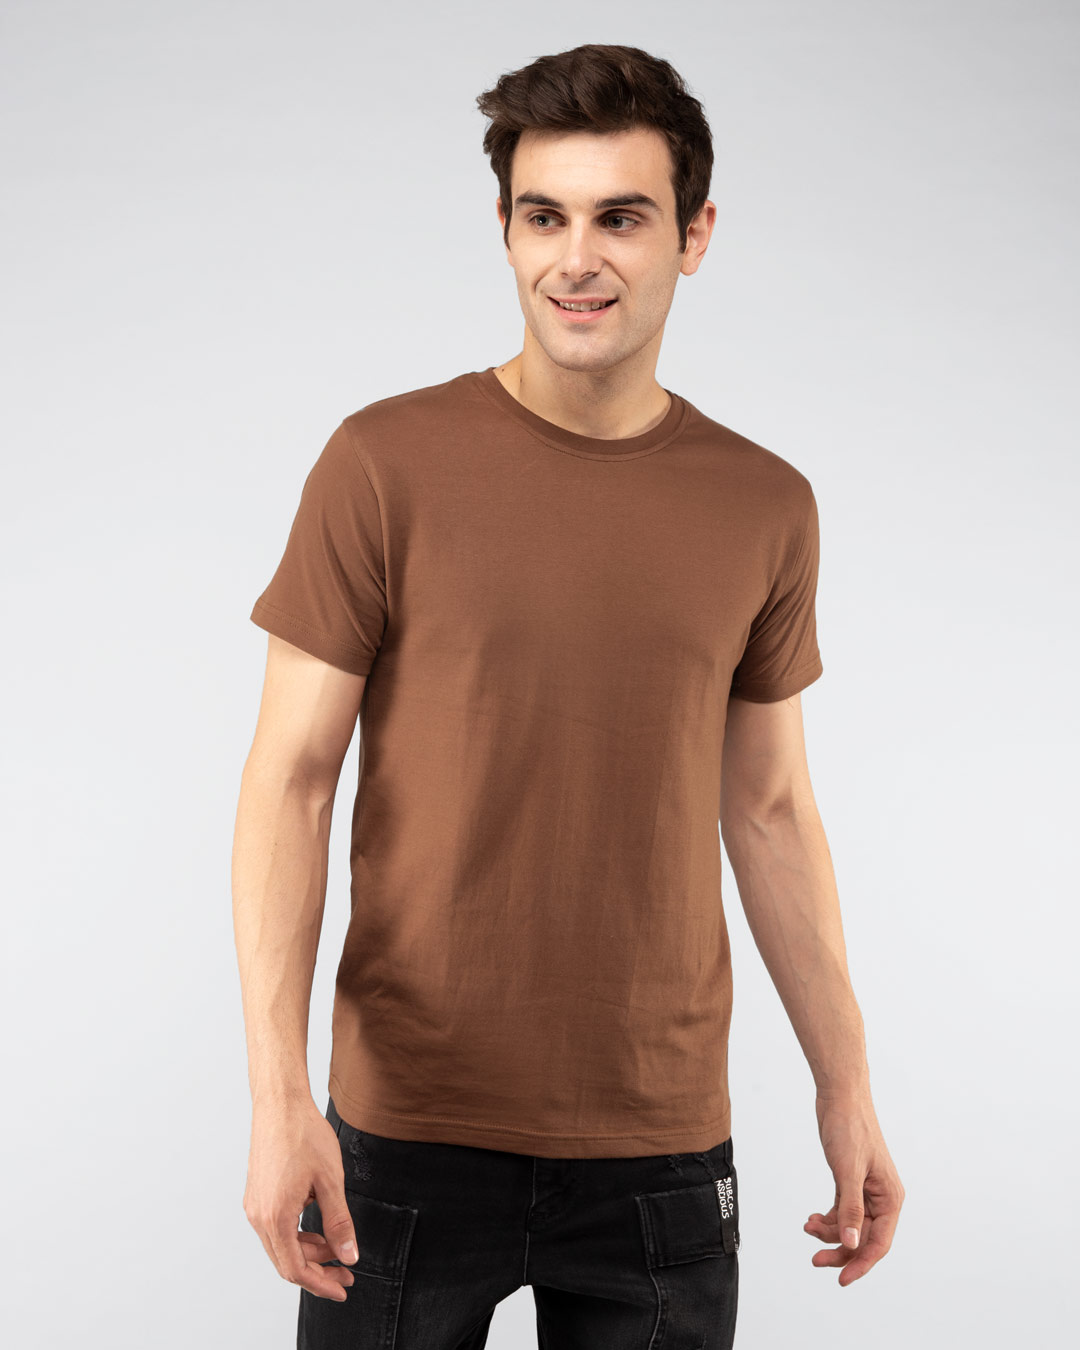 Buy Brown Plain Half Sleeve T-Shirt For Men Online India @ Bewakoof.com